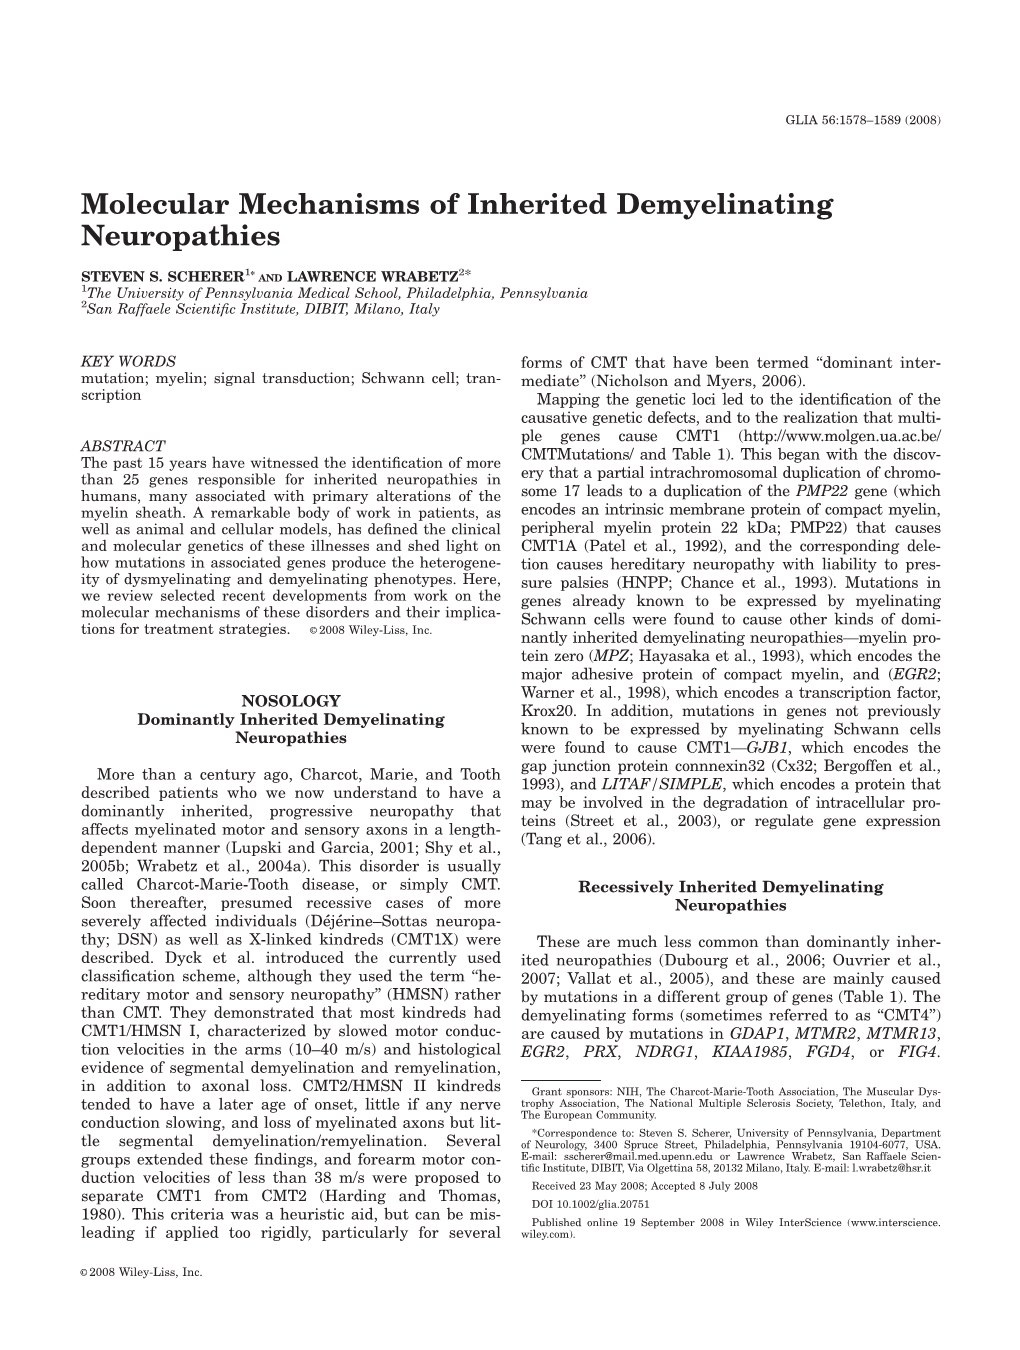 Molecular Mechanisms of Inherited Demyelinating Neuropathies